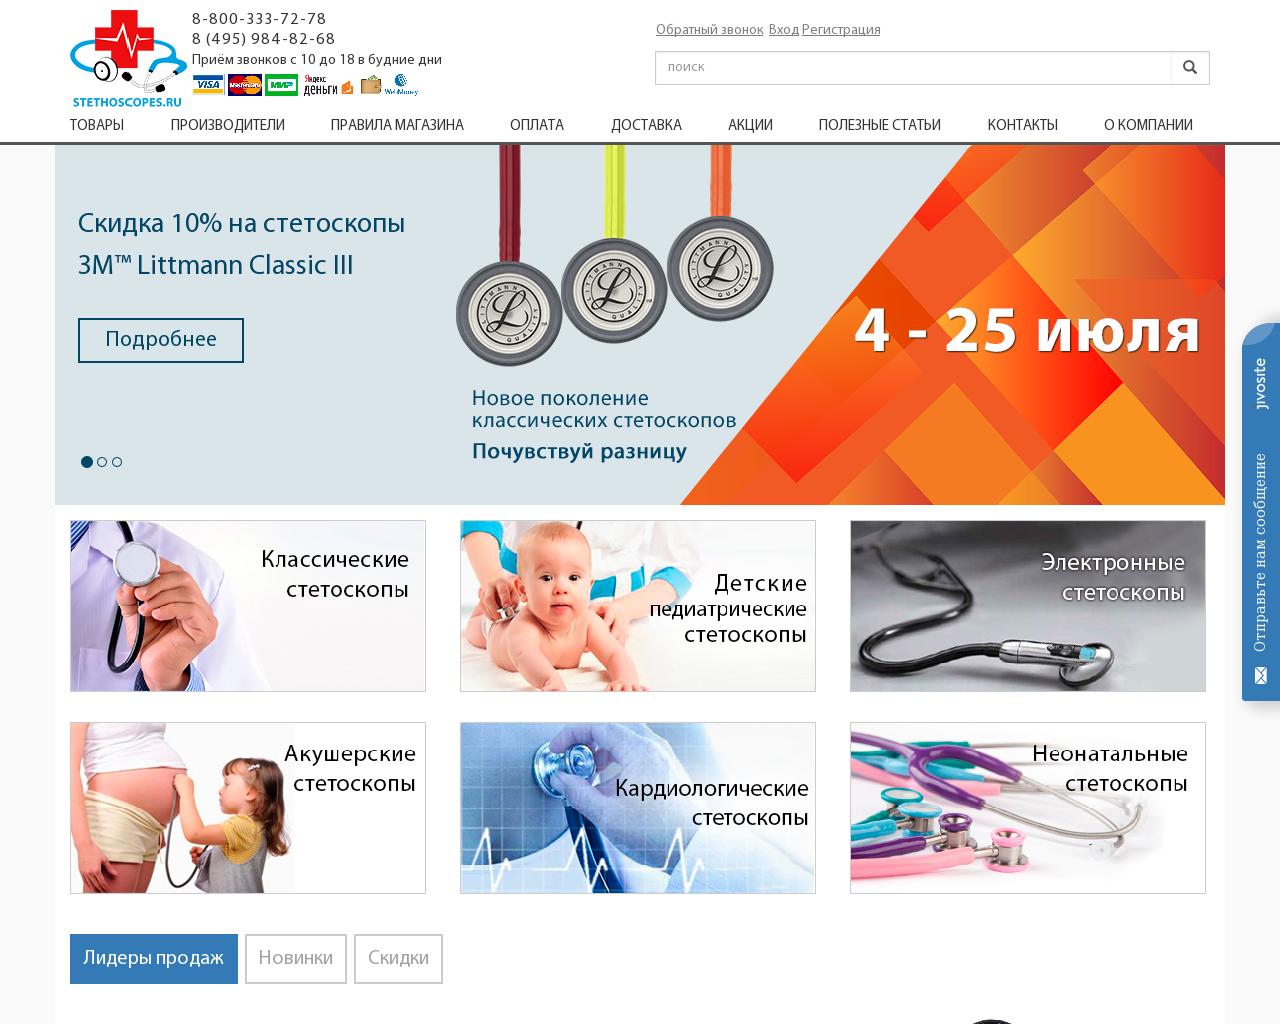 Изображение сайта stethoscopes.ru в разрешении 1280x1024